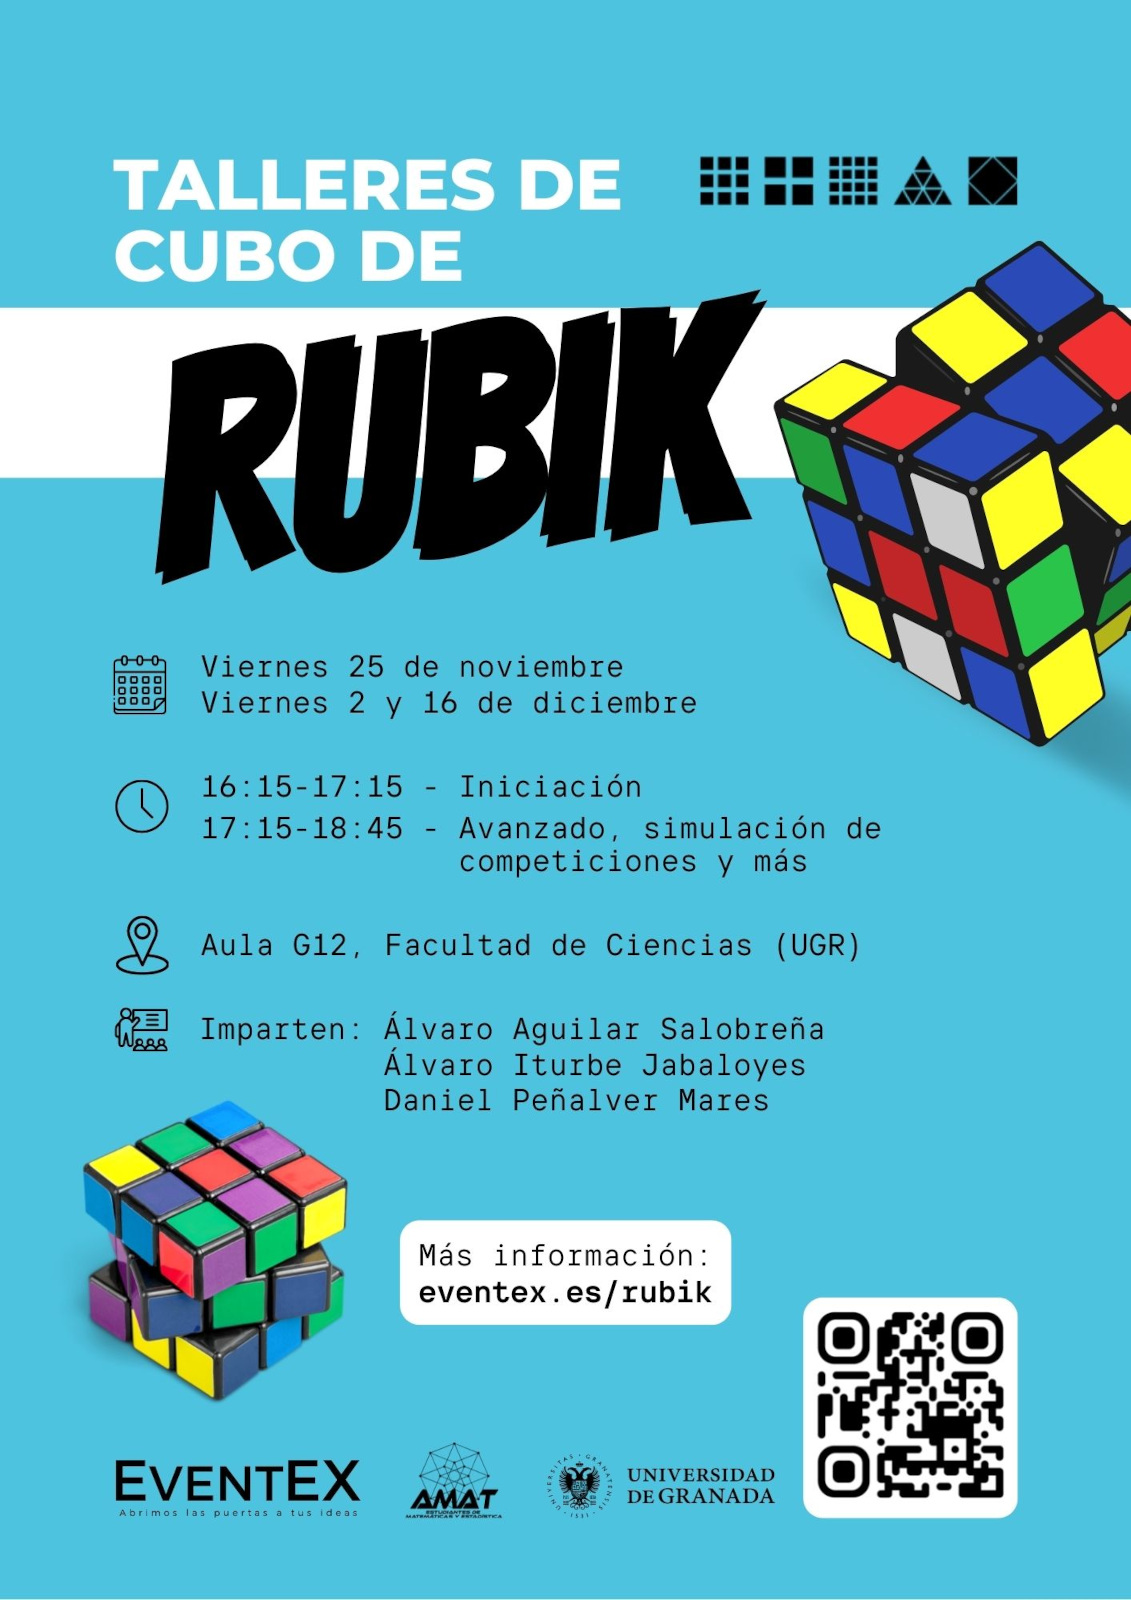 Talleres de Cubo de Rubik